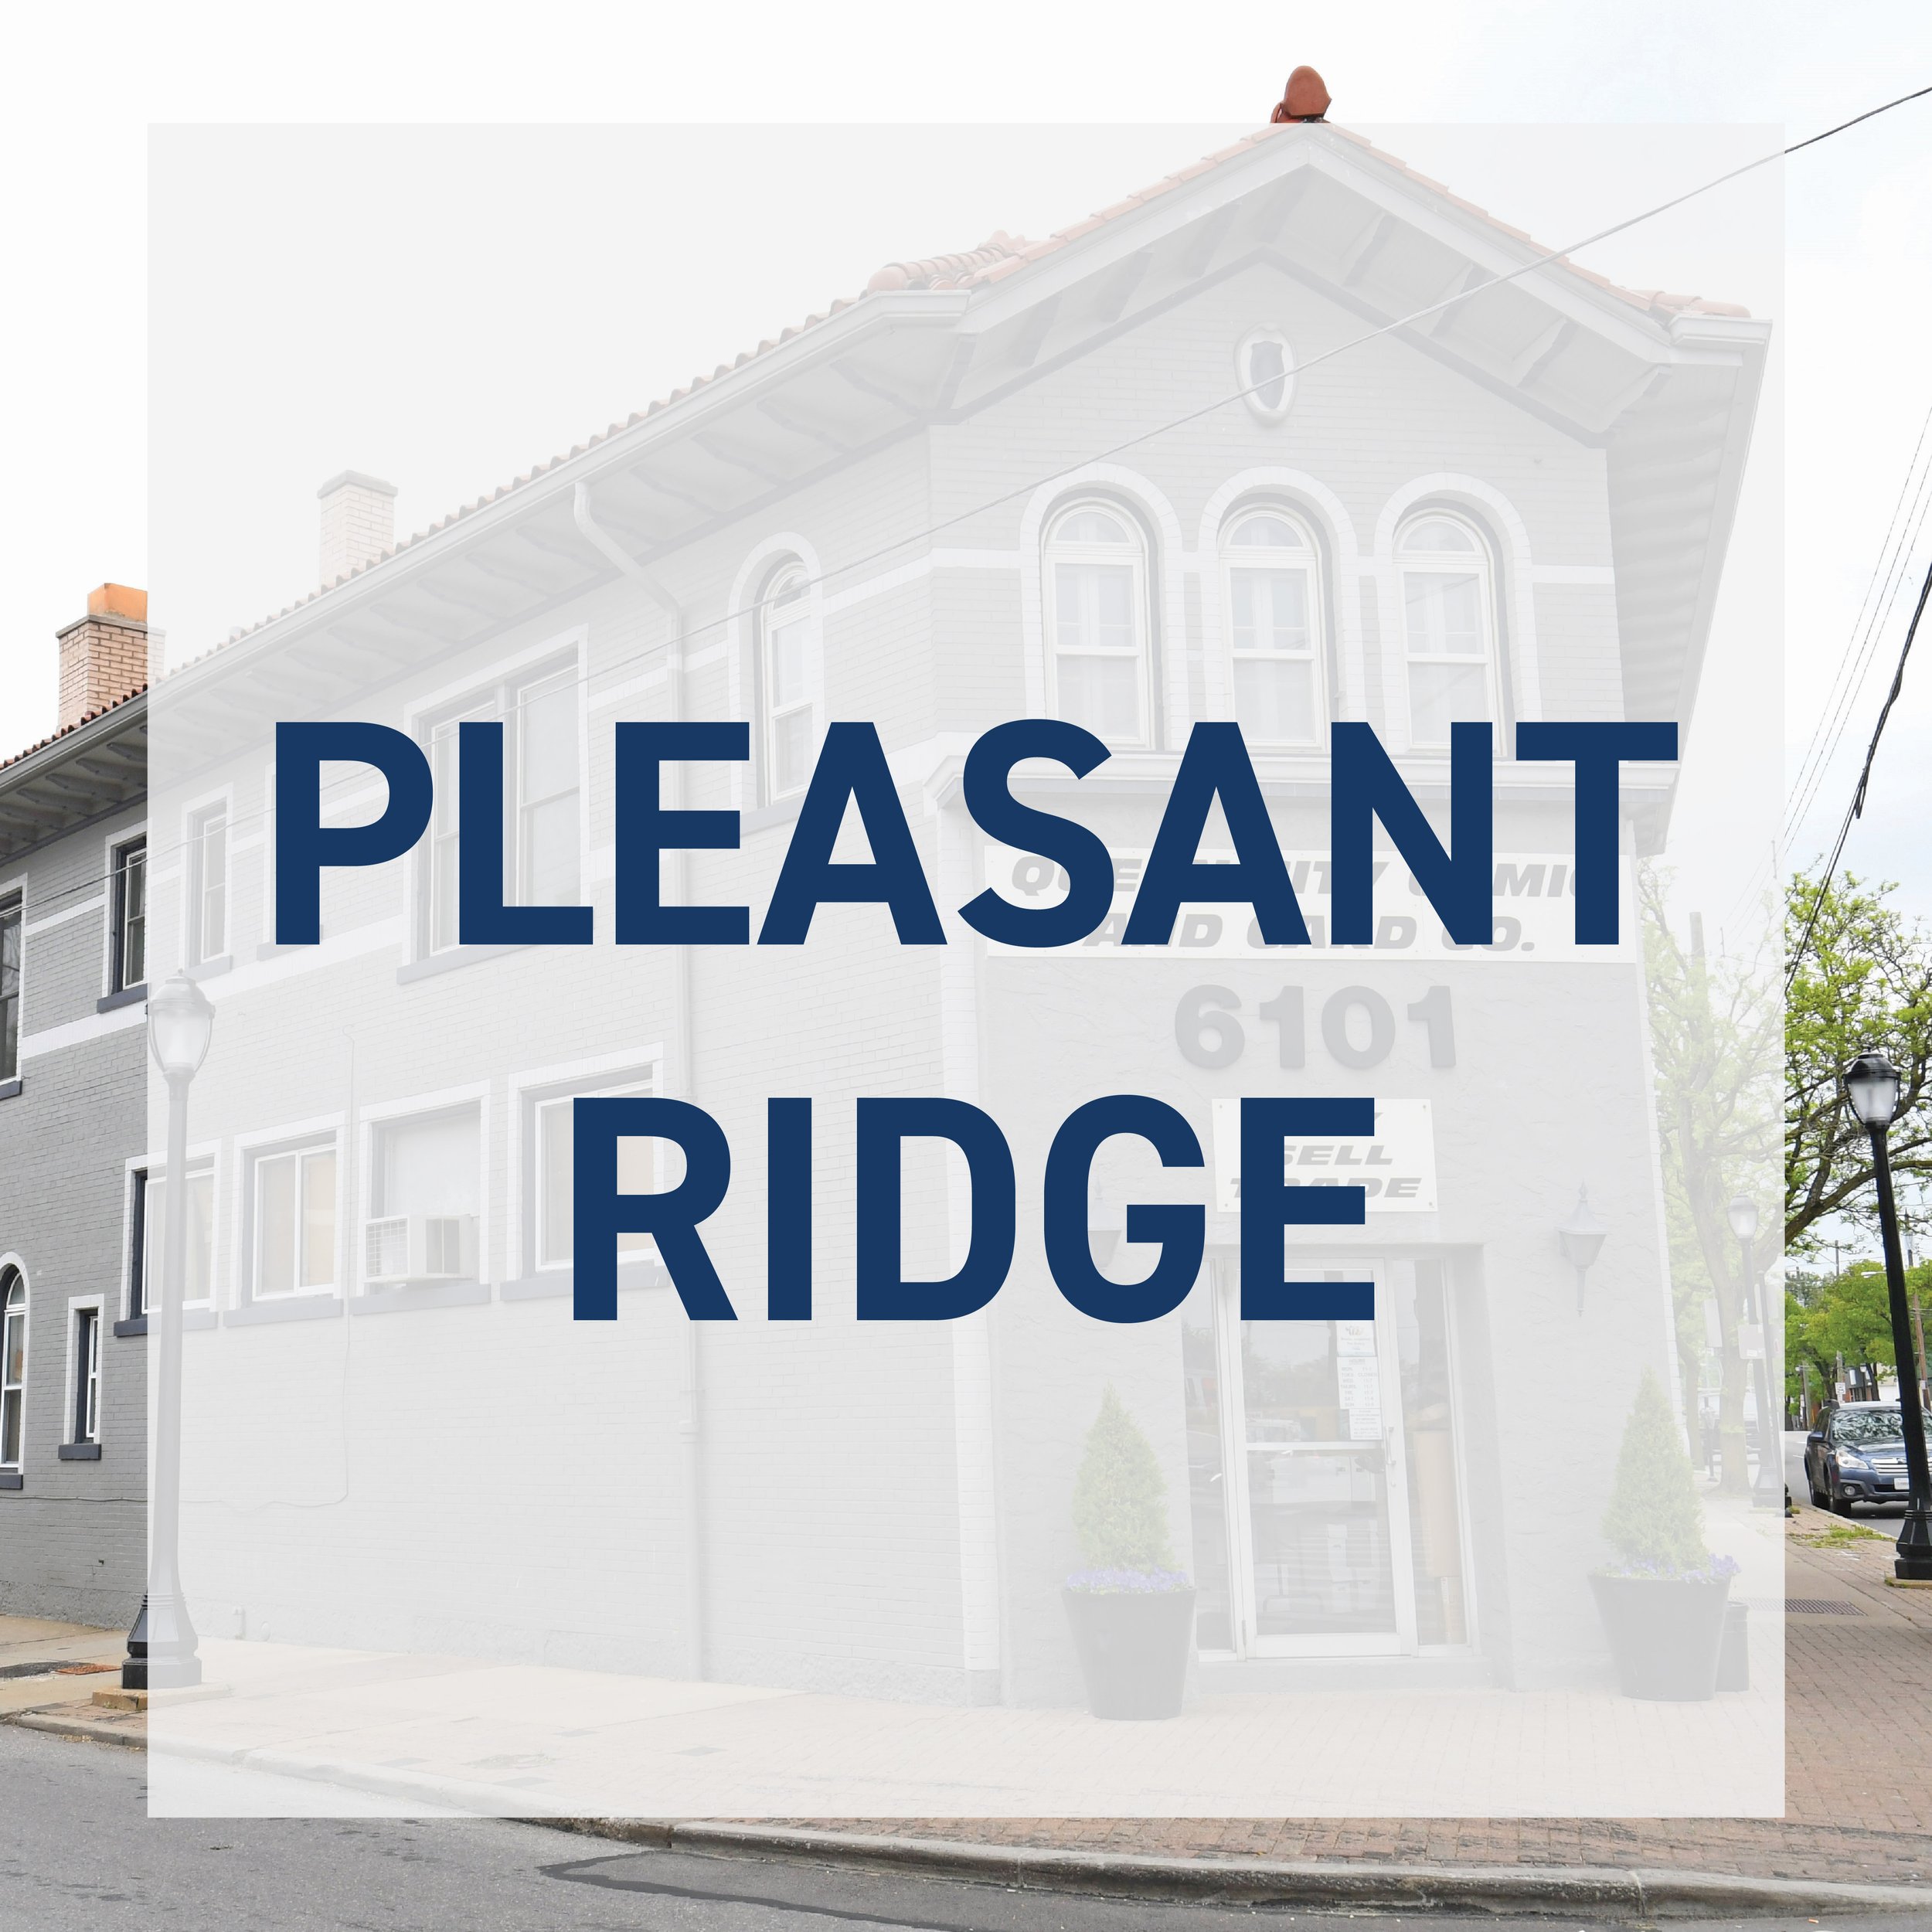 Pleasant Ridge 2-01.jpg